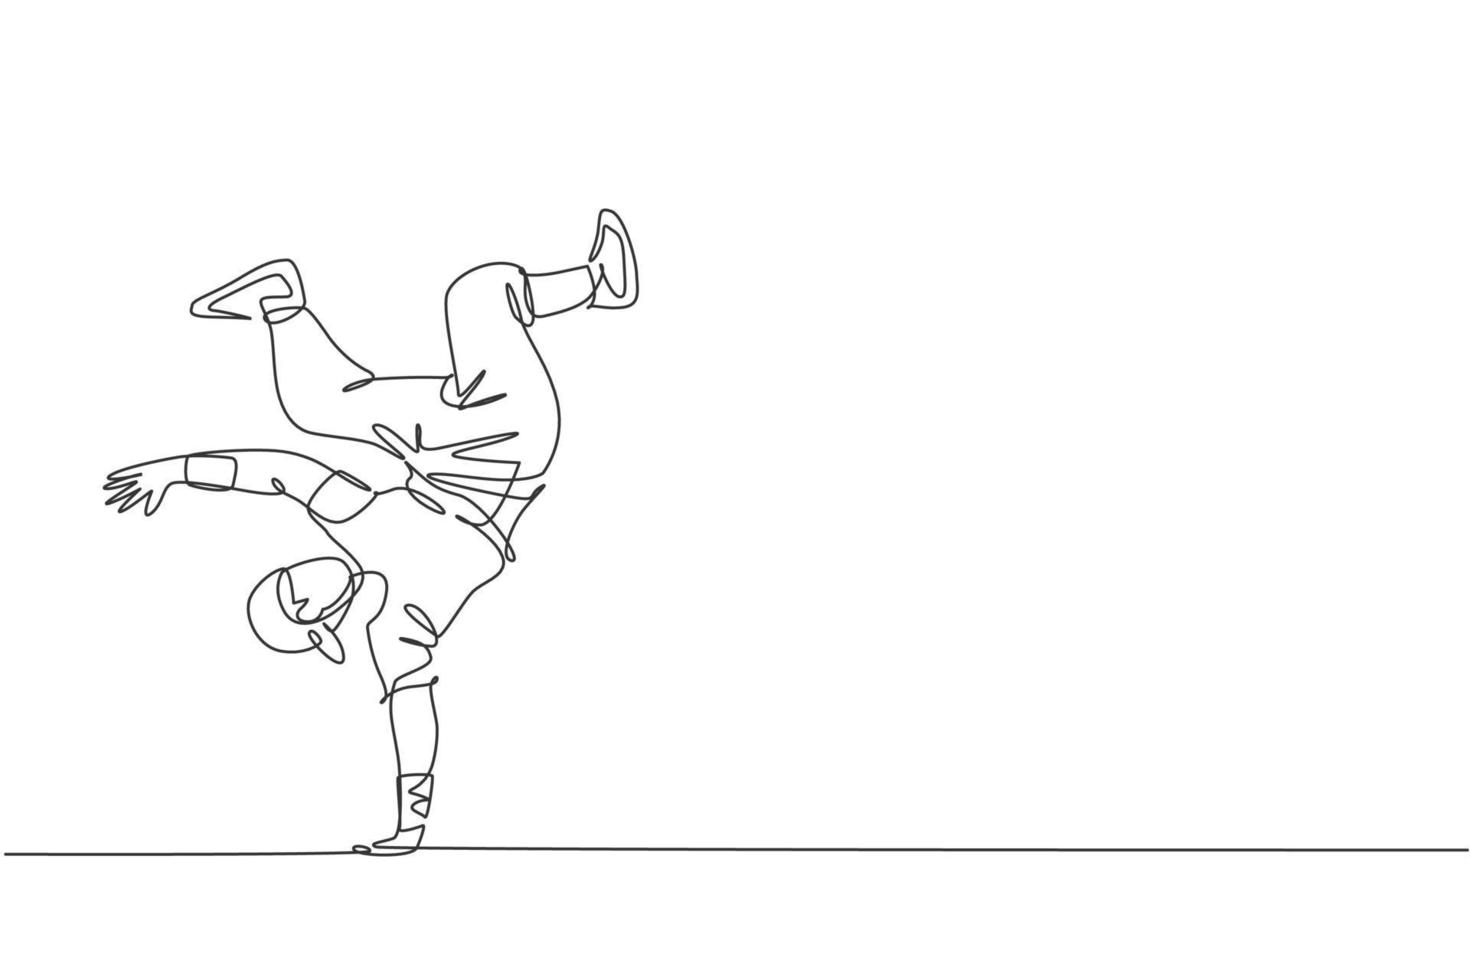 en kontinuerlig linjeteckning av ung sportig pausdansare med avslappnad skjorta visar hiphop -dansstil på gatan. urban livsstil sport koncept. dynamisk enkel linje rita design vektor illustration